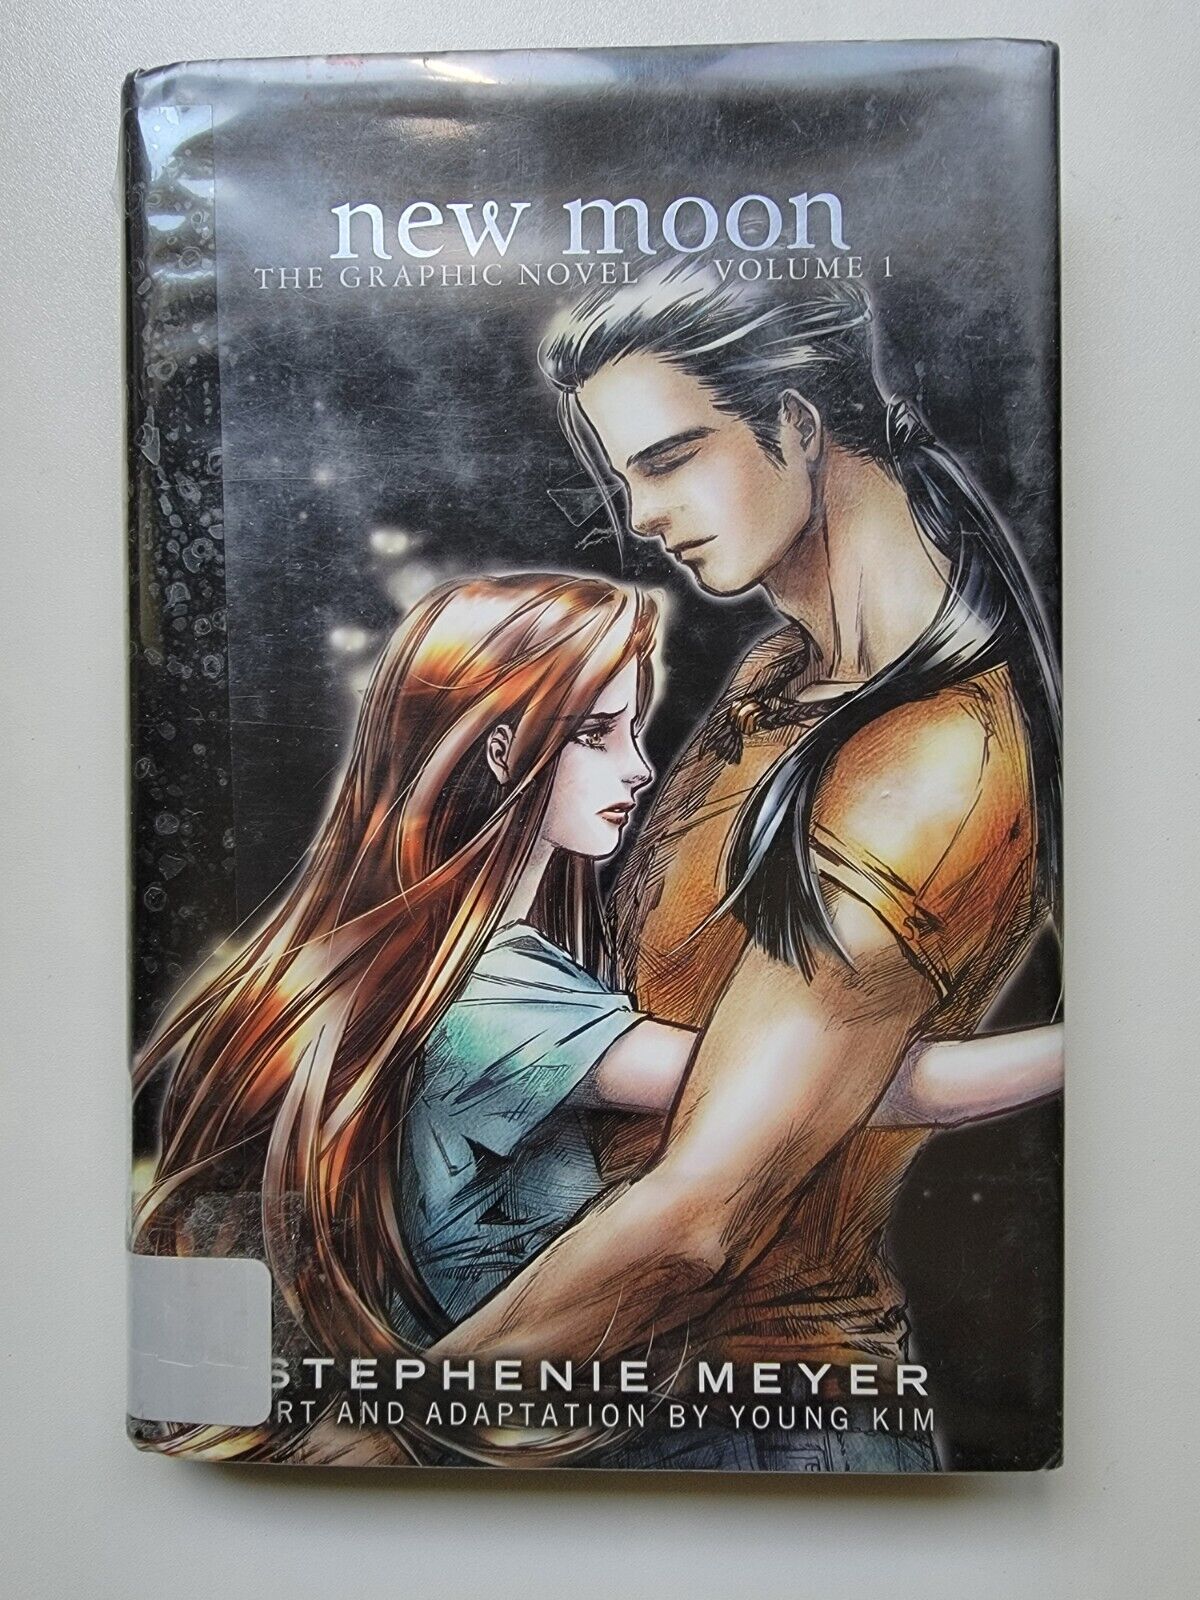 The Twilight Saga New Moon: Graphic Novel, Vol. 1 by Stephenie Meyer 1st Print 